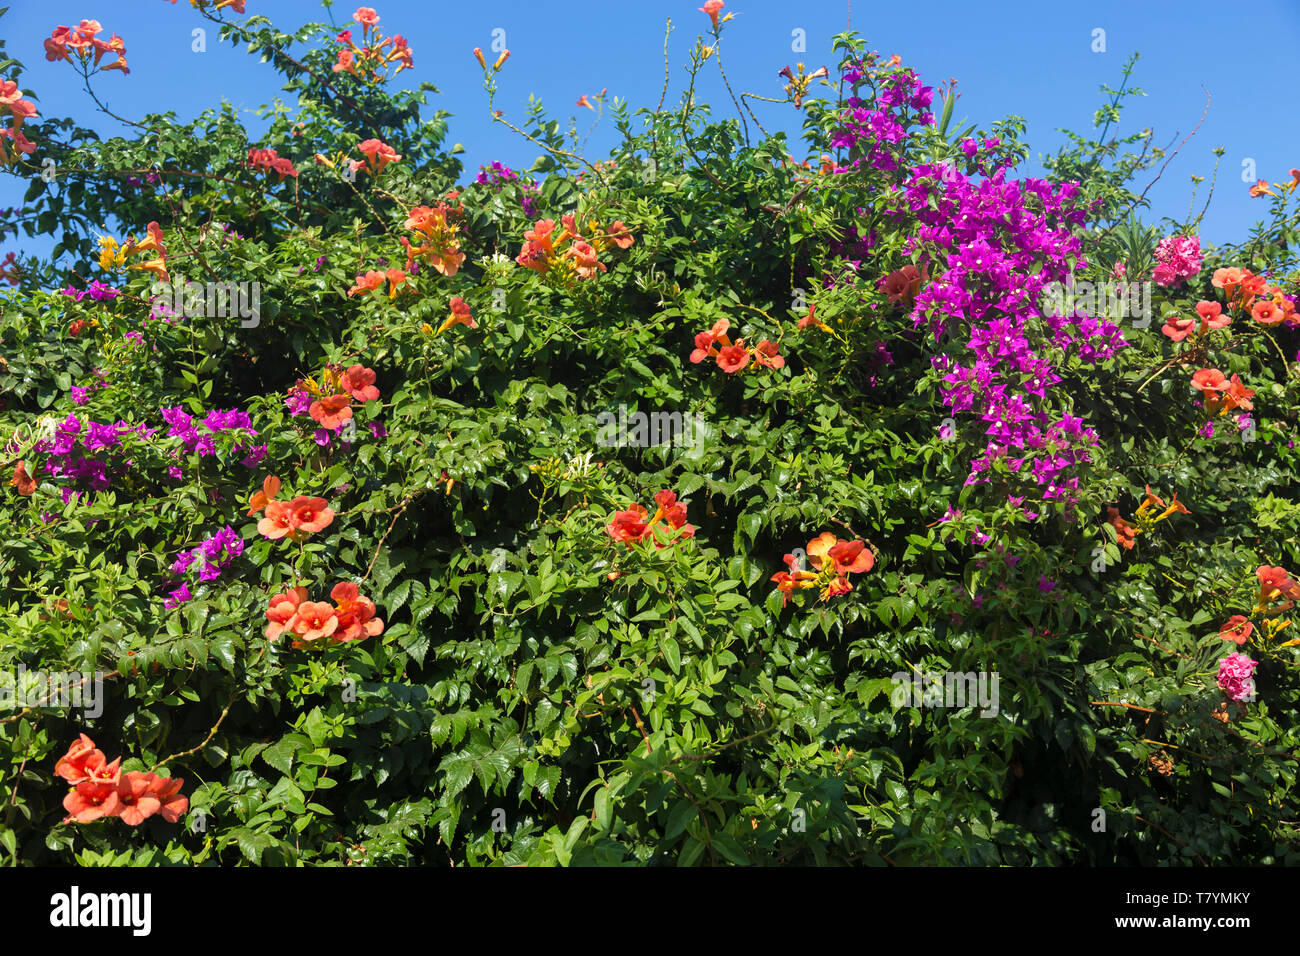 Bougainvillea with beautiful purple and orange flowers in Greece Stock Photo